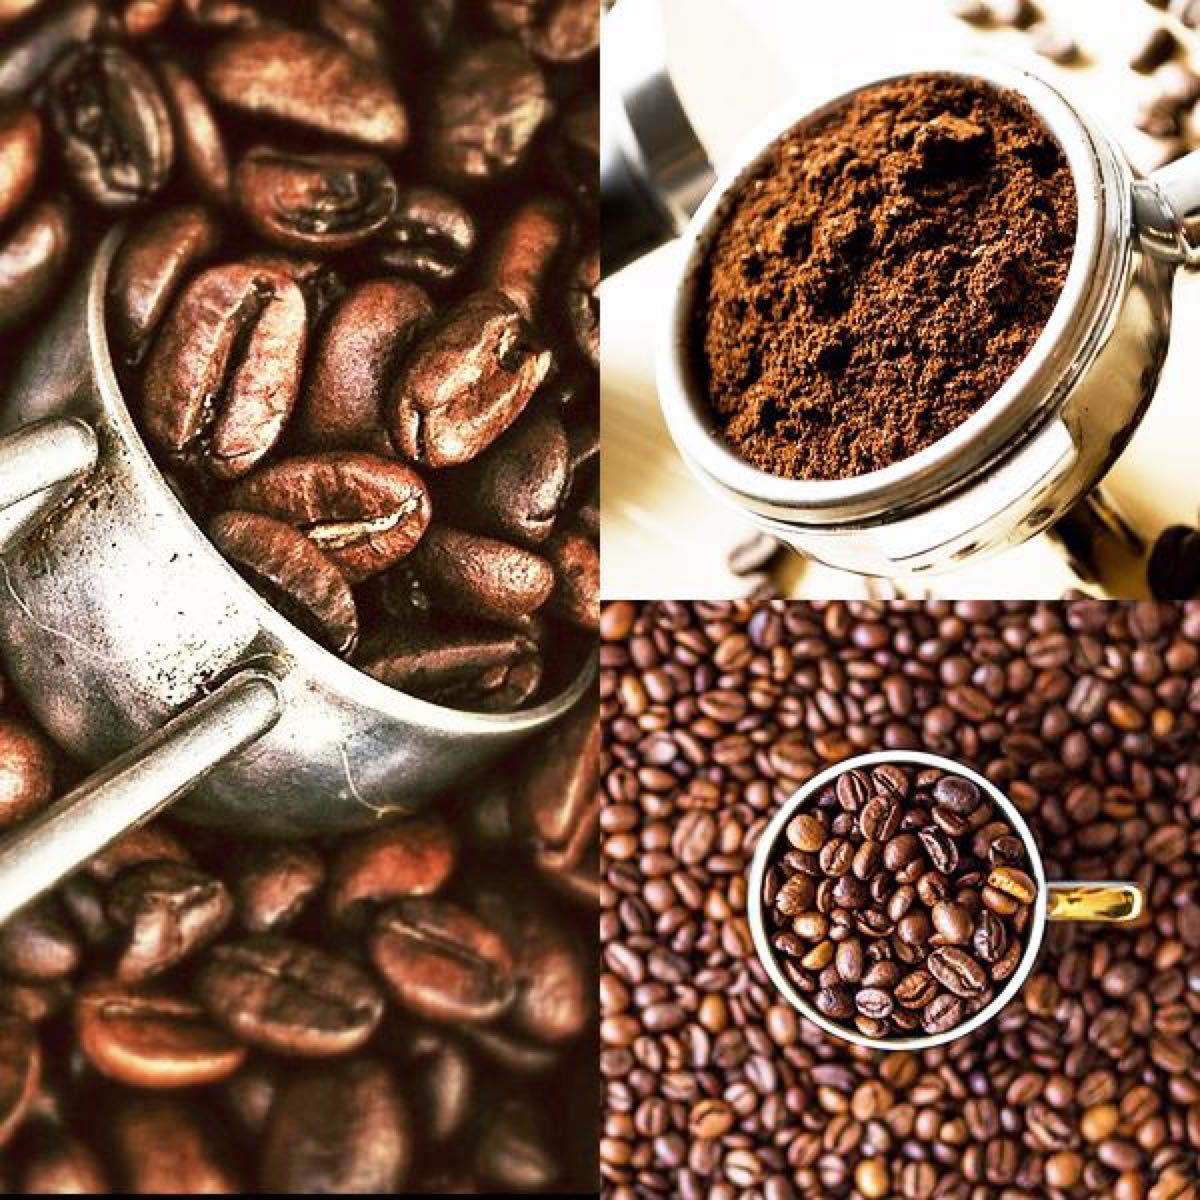 【YHR-COFFEE】至福の1杯 オリジナルブレンド ドリップコーヒー 10g 厳選素材 丁寧焙煎 深いコク 豊かな香り 